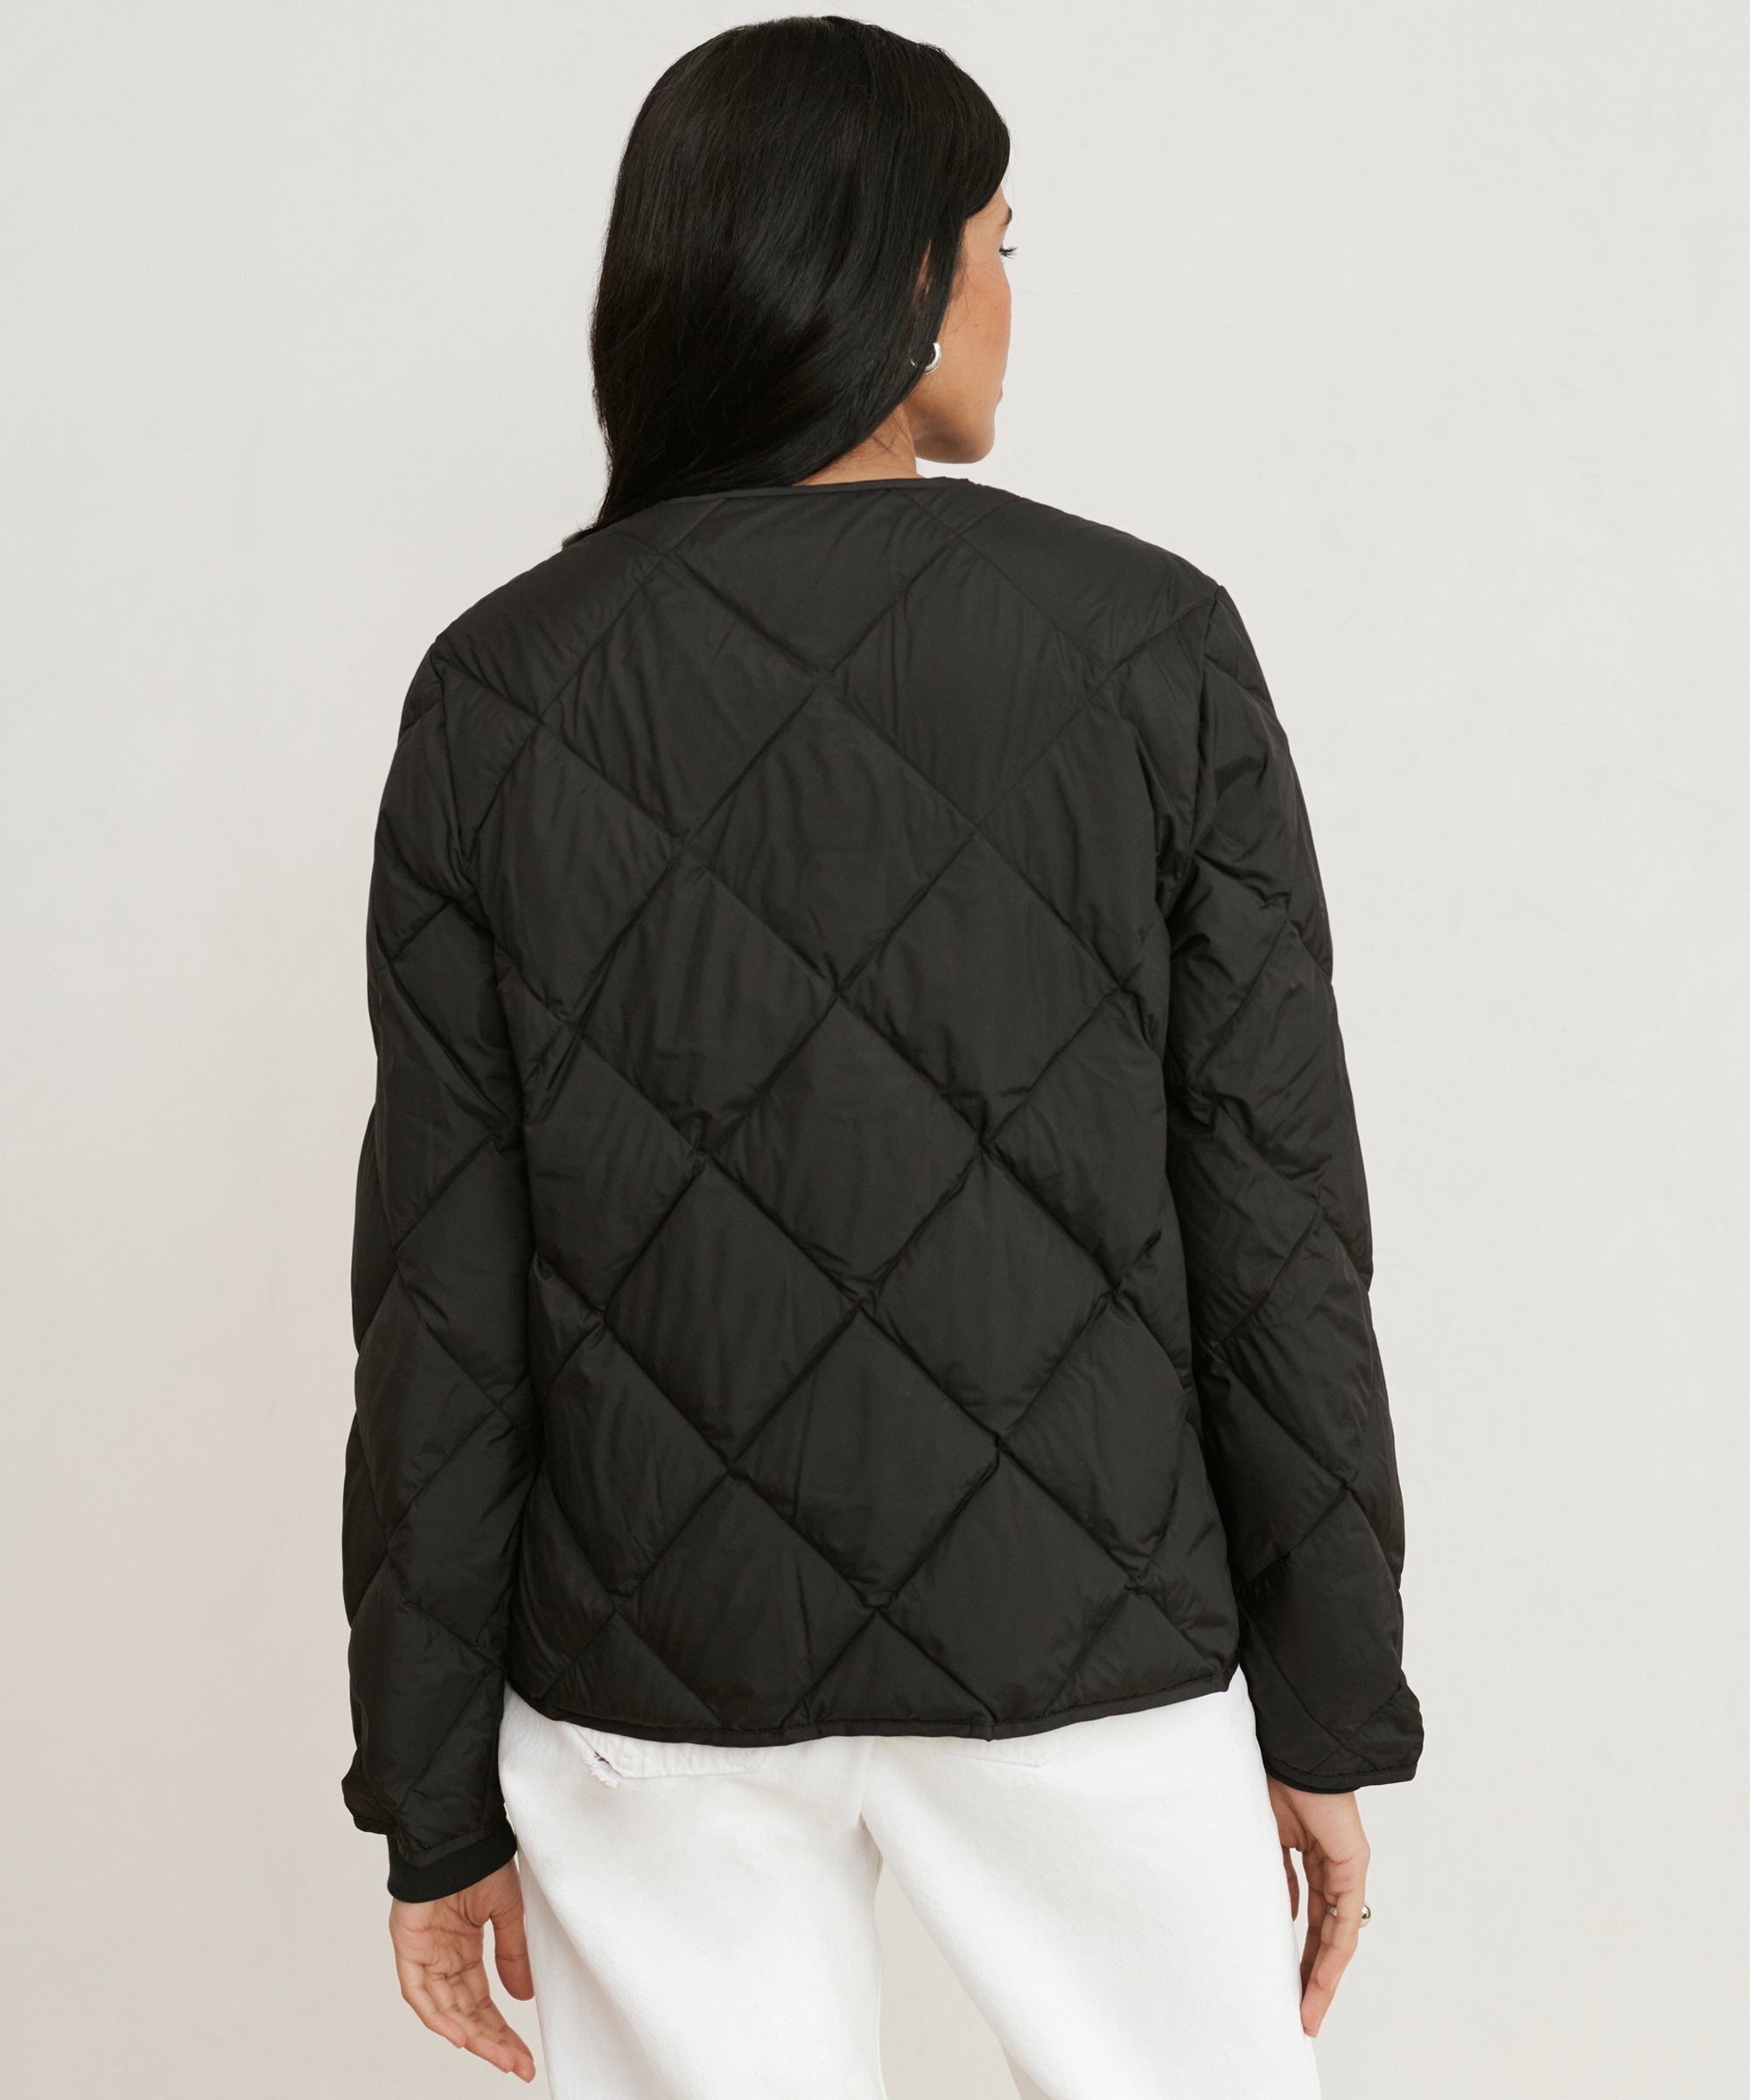 Jenni Kayne Women's Long Puffer Jacket Size Medium